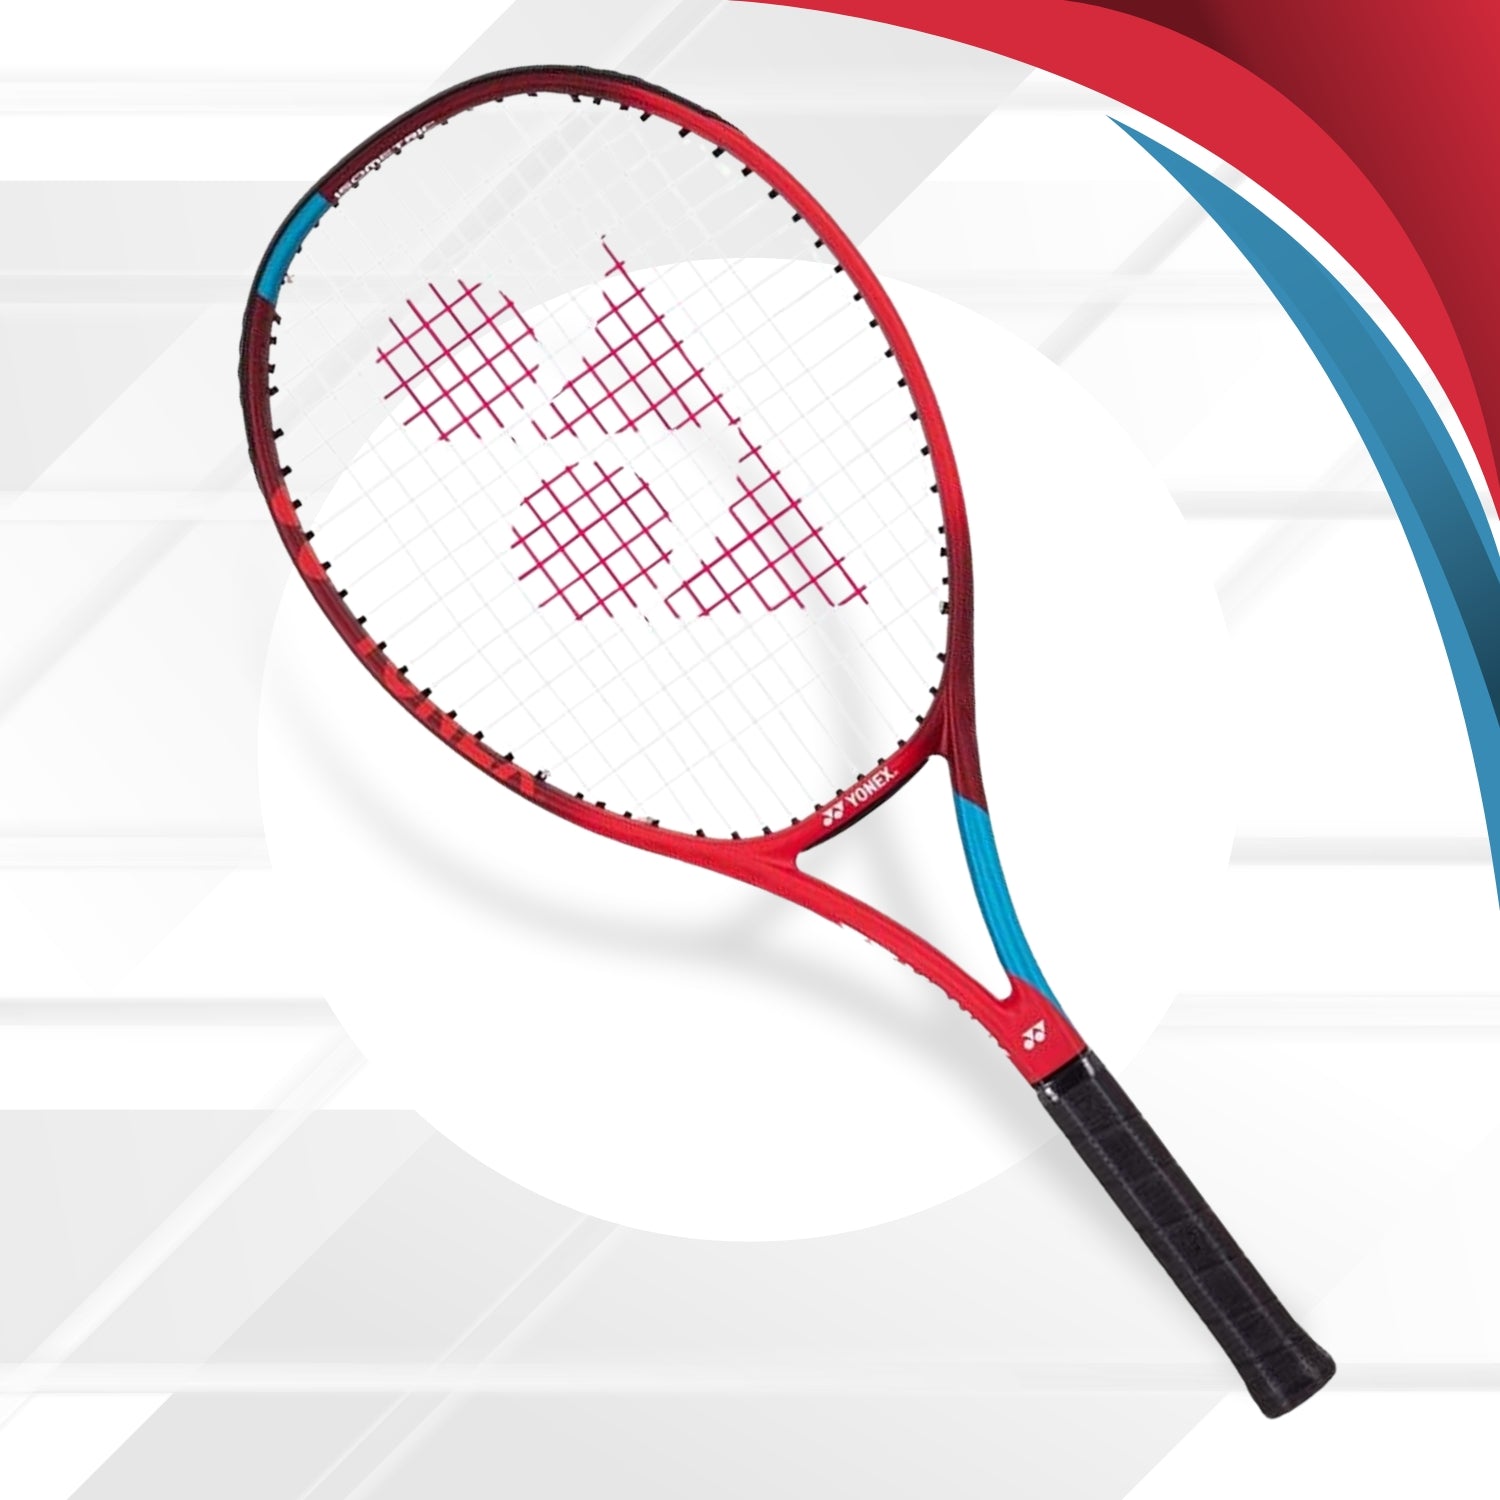 Yonex Vcore 26 Tennis Racquet - Best Price online Prokicksports.com